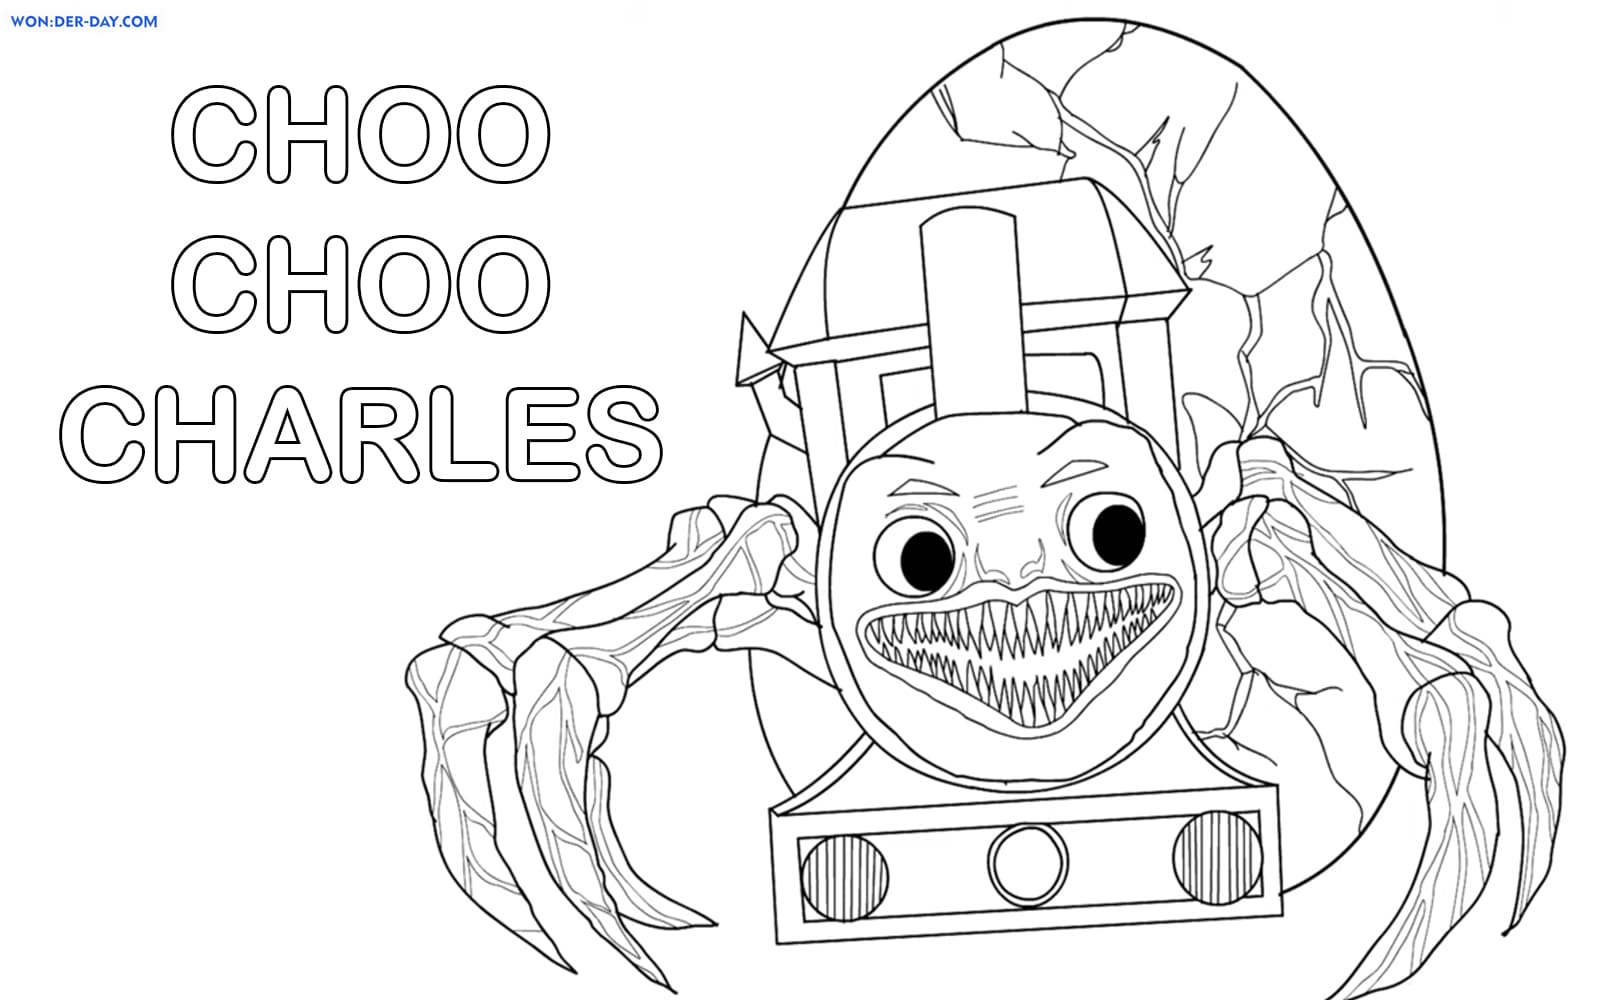 Desenhos para colorir de Choo Choo Charles para imprimir gratuitamente